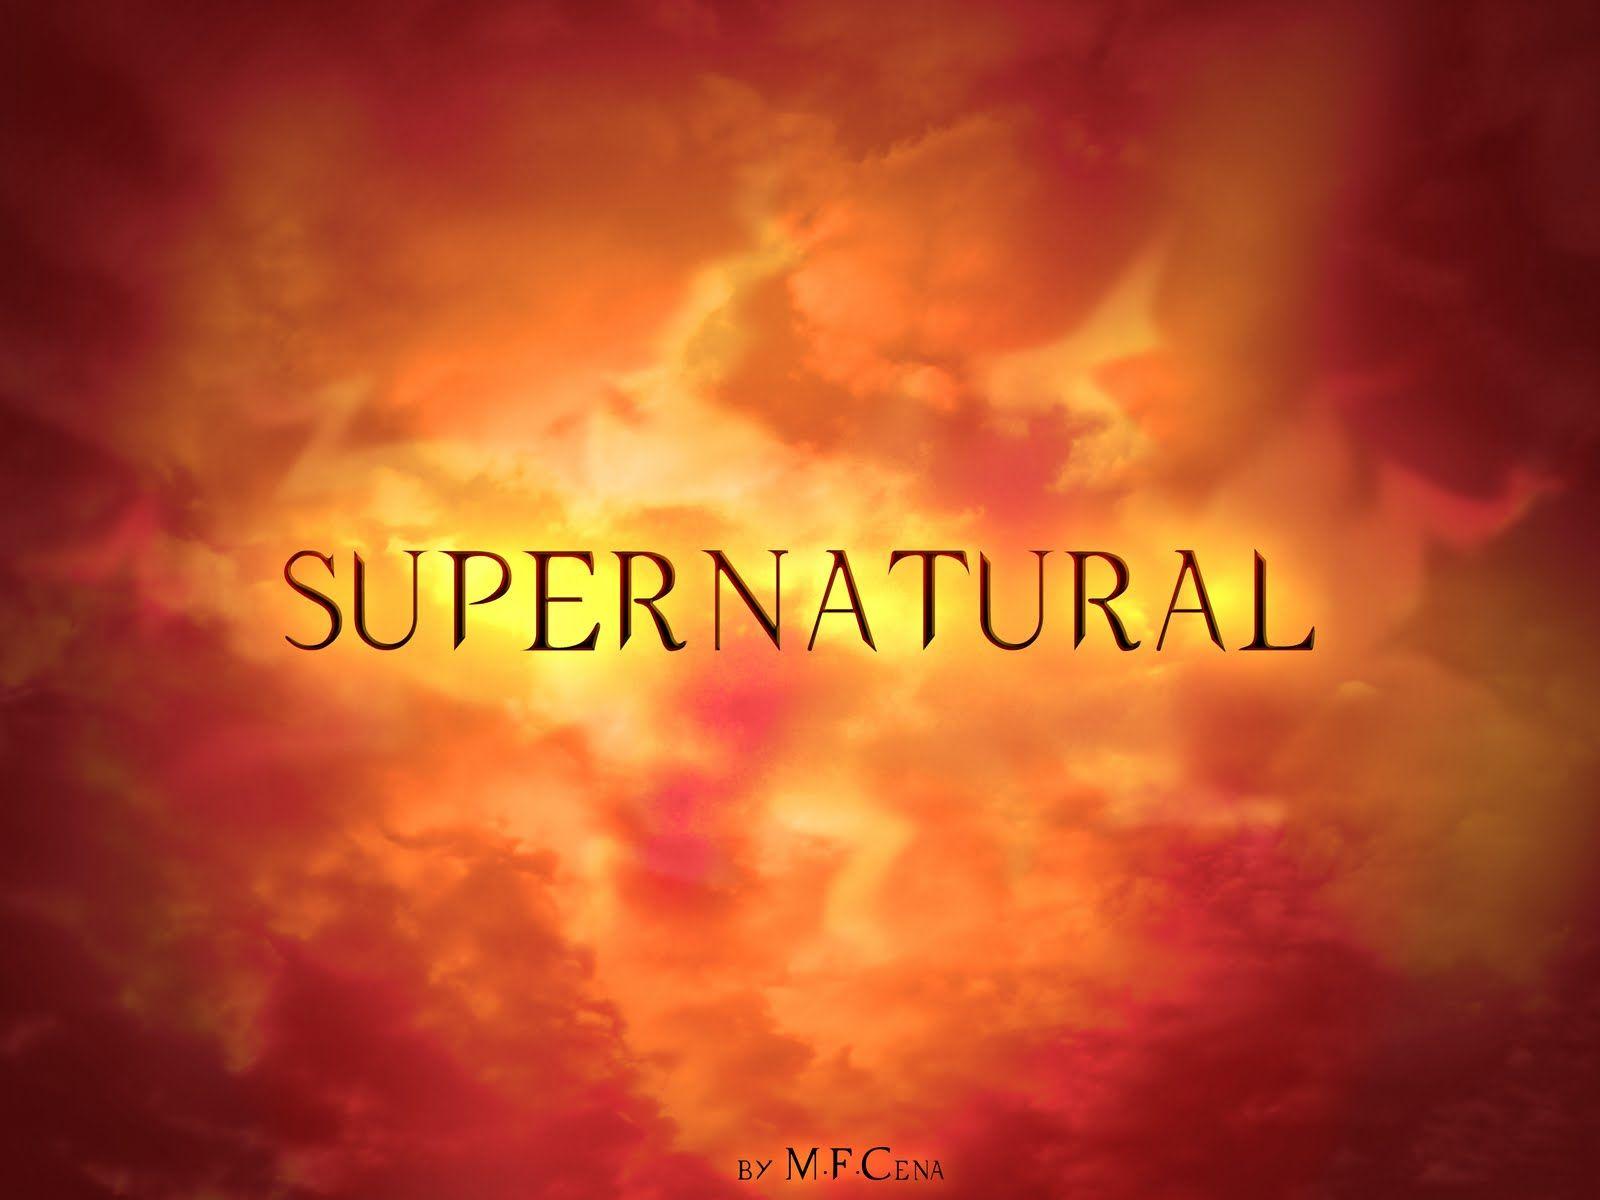 Supernatural Logo Wallpaper